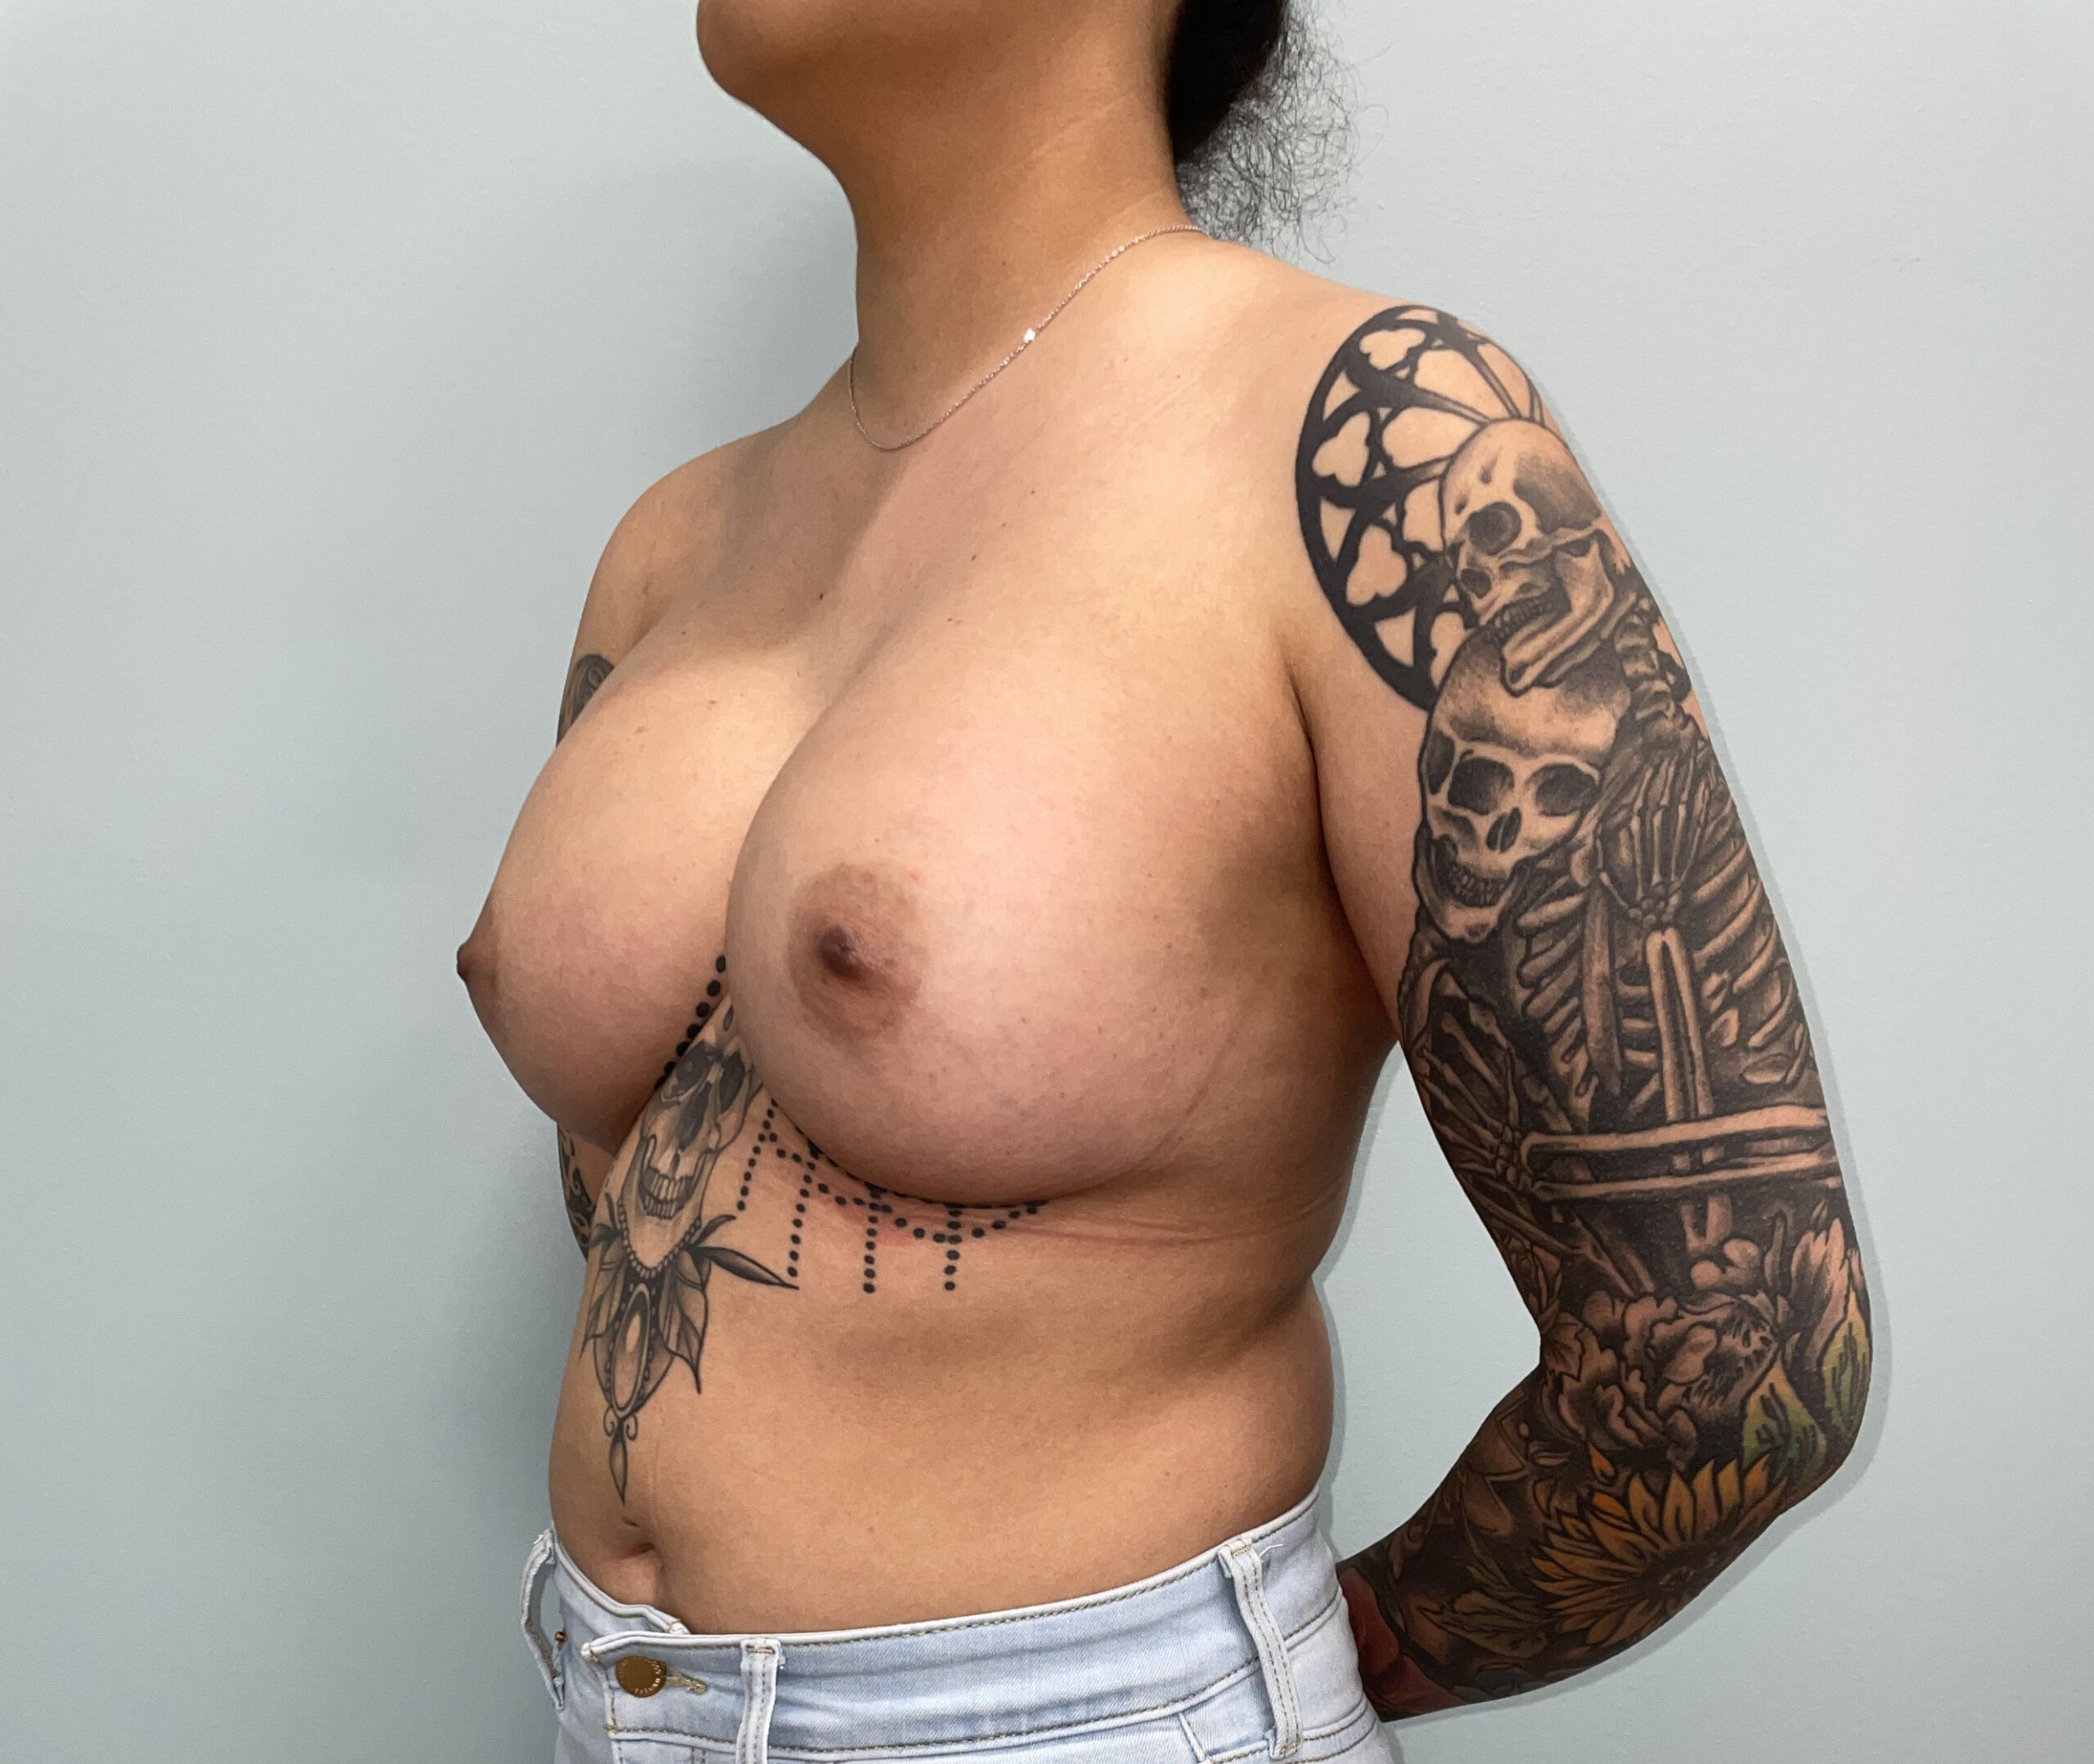 Breast Augmentation Patient Photo - Case 3770 - after view-1